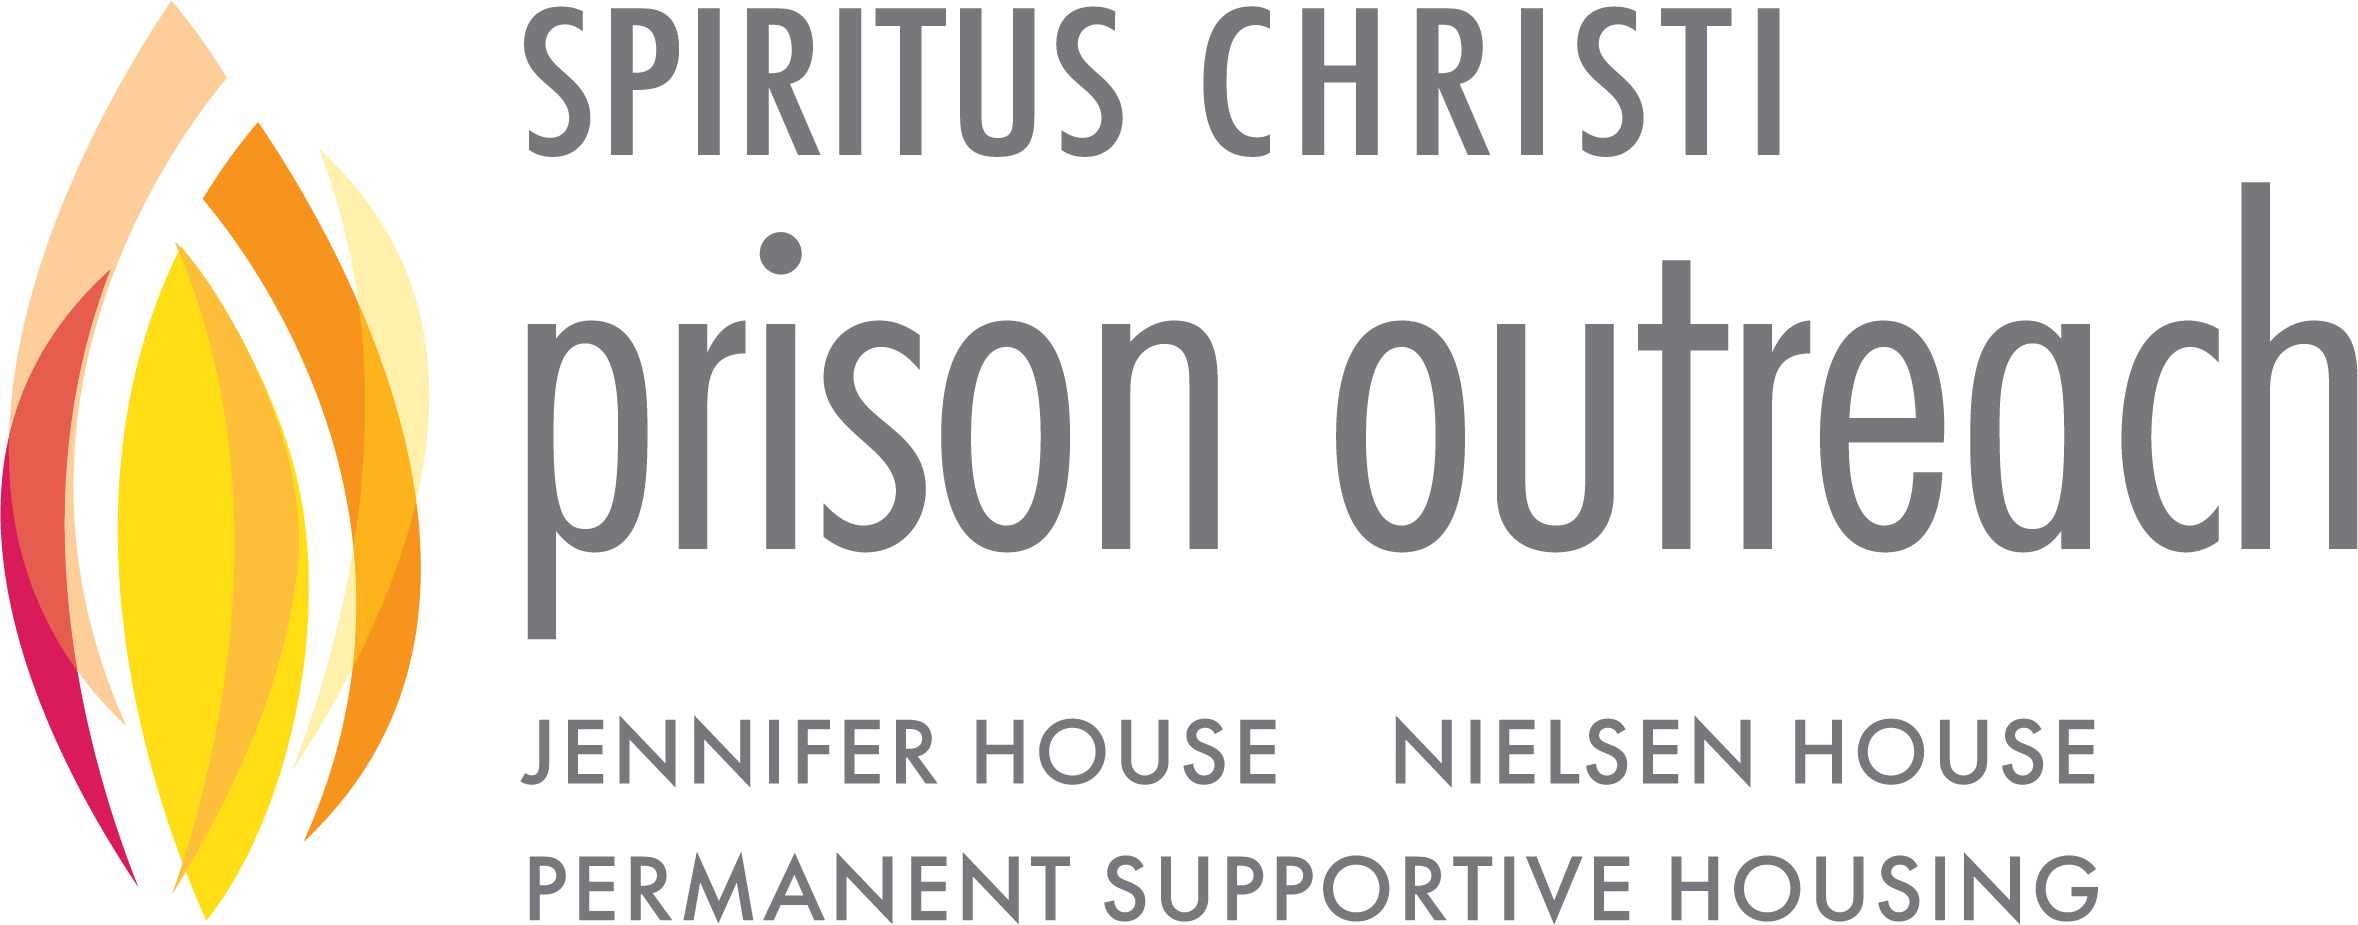 Spiritus Christi Prison Outreach